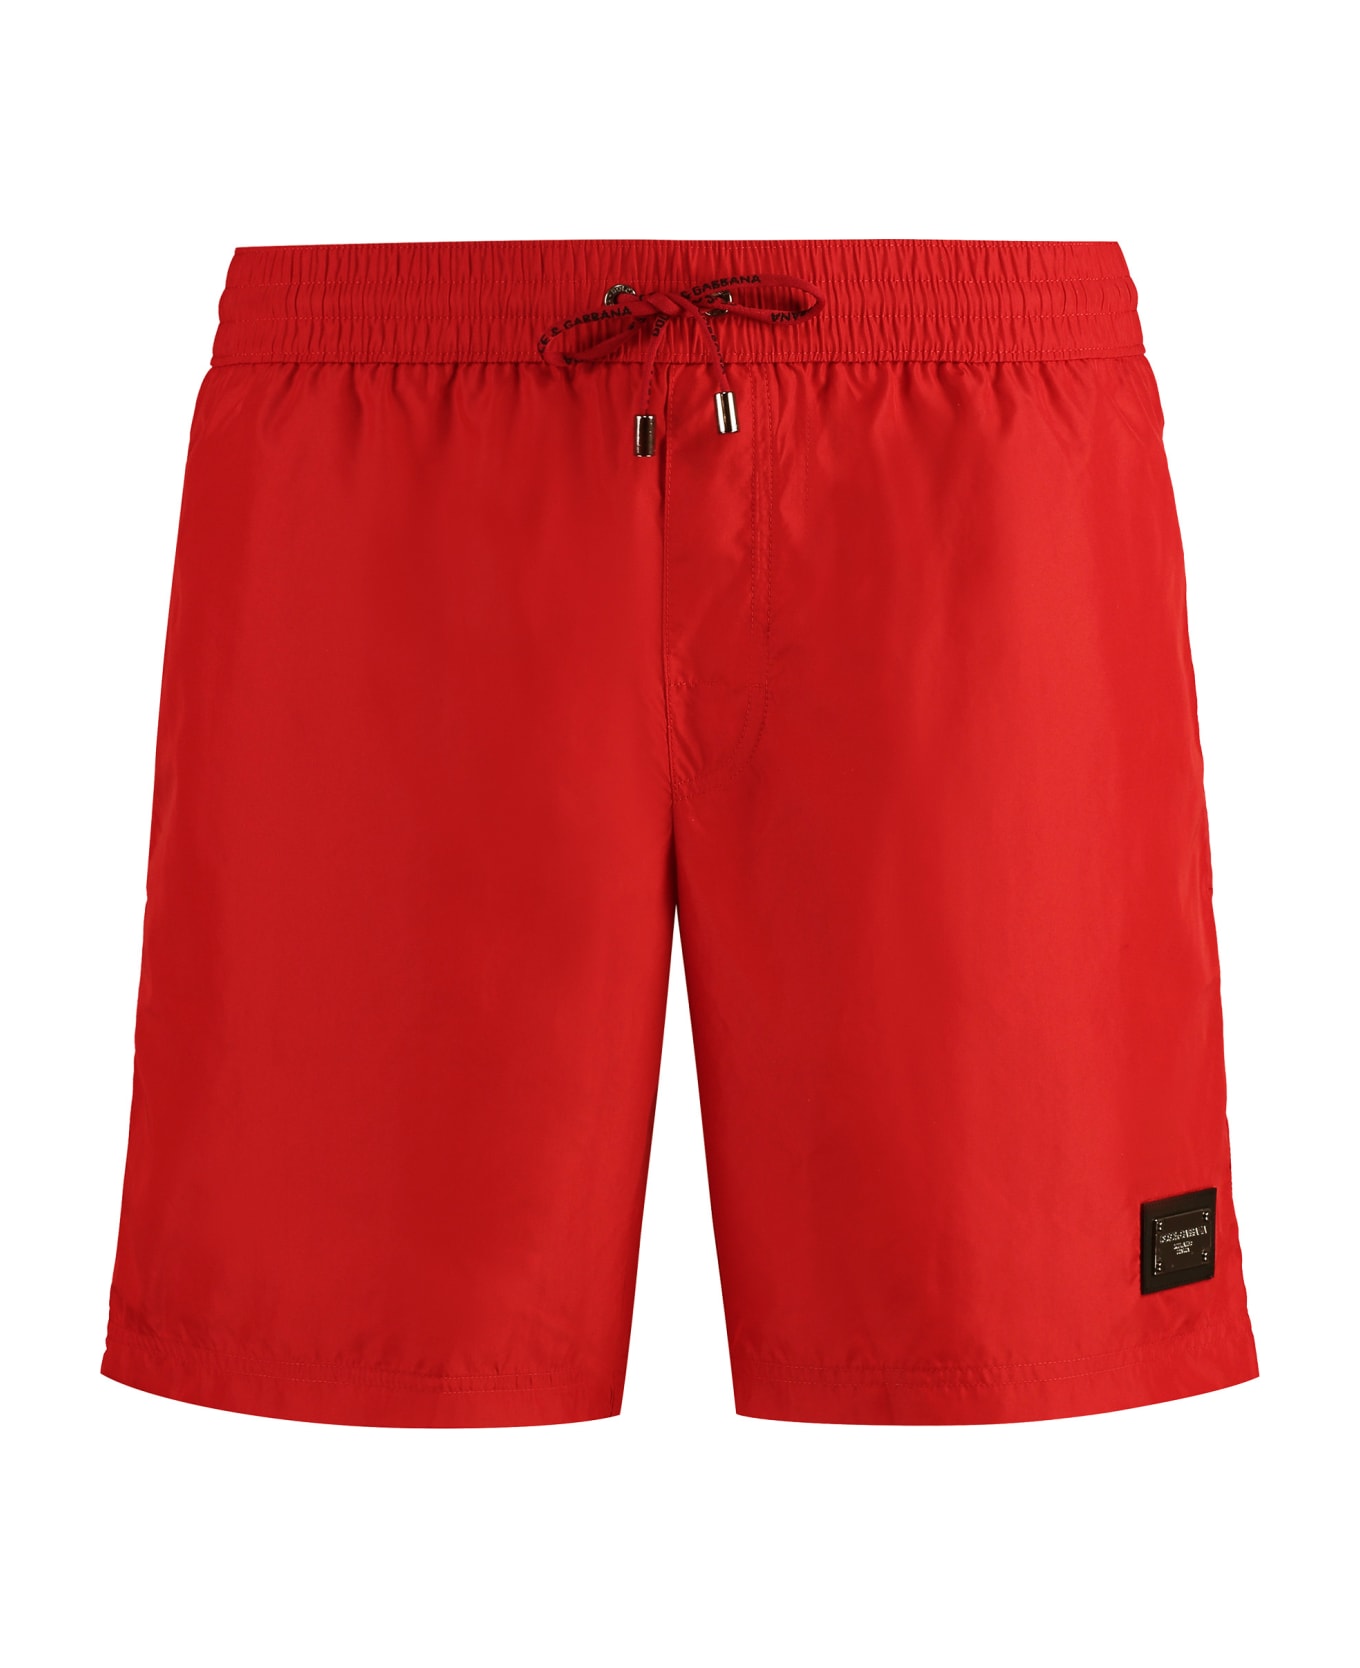 Dolce & Gabbana Nylon Swim Shorts - red 水着